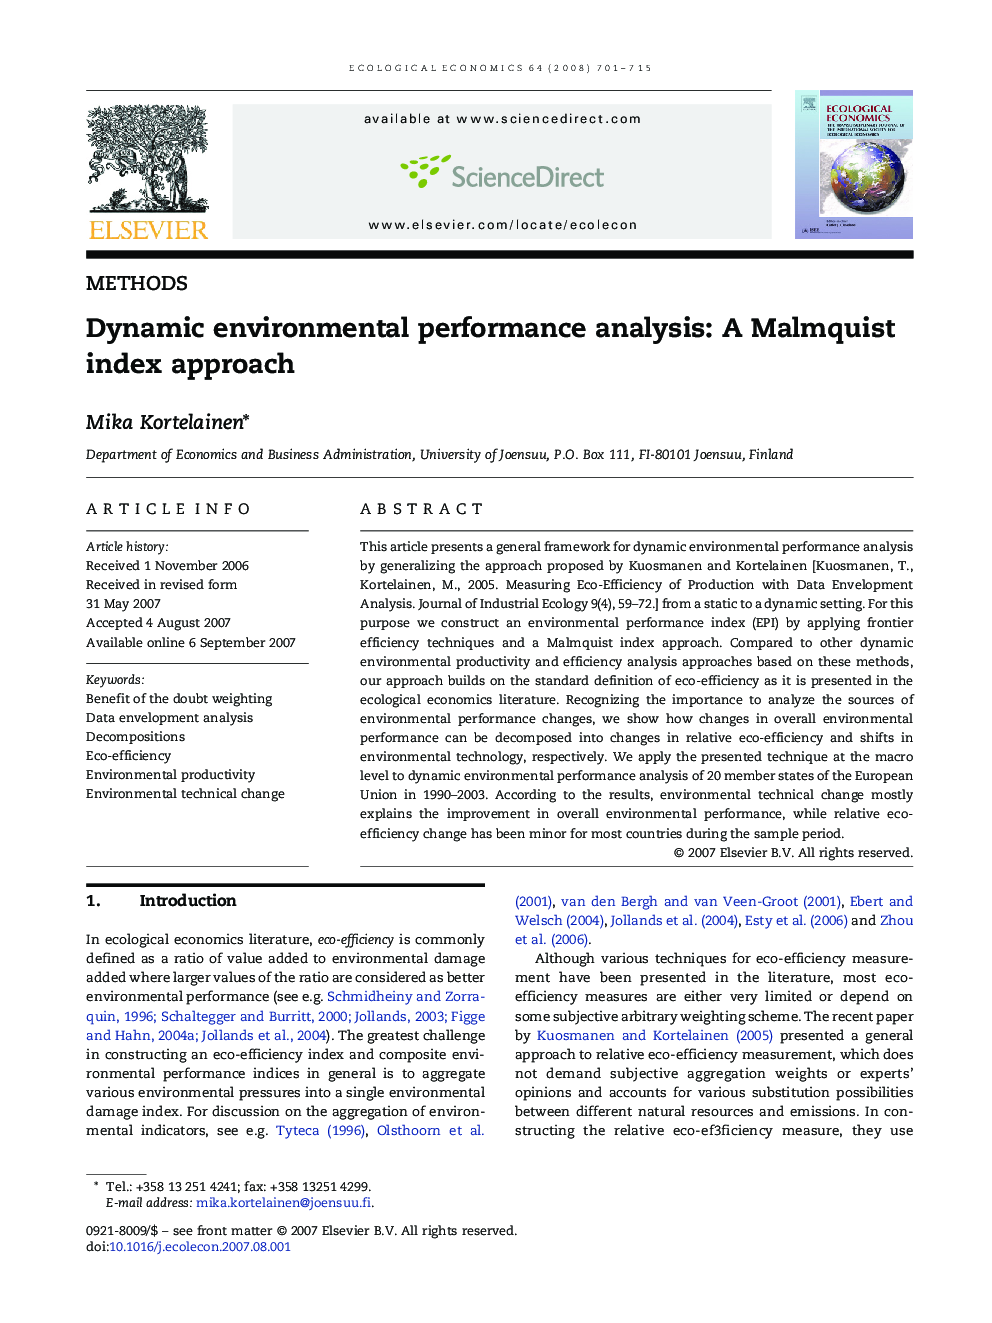 Dynamic environmental performance analysis: A Malmquist index approach